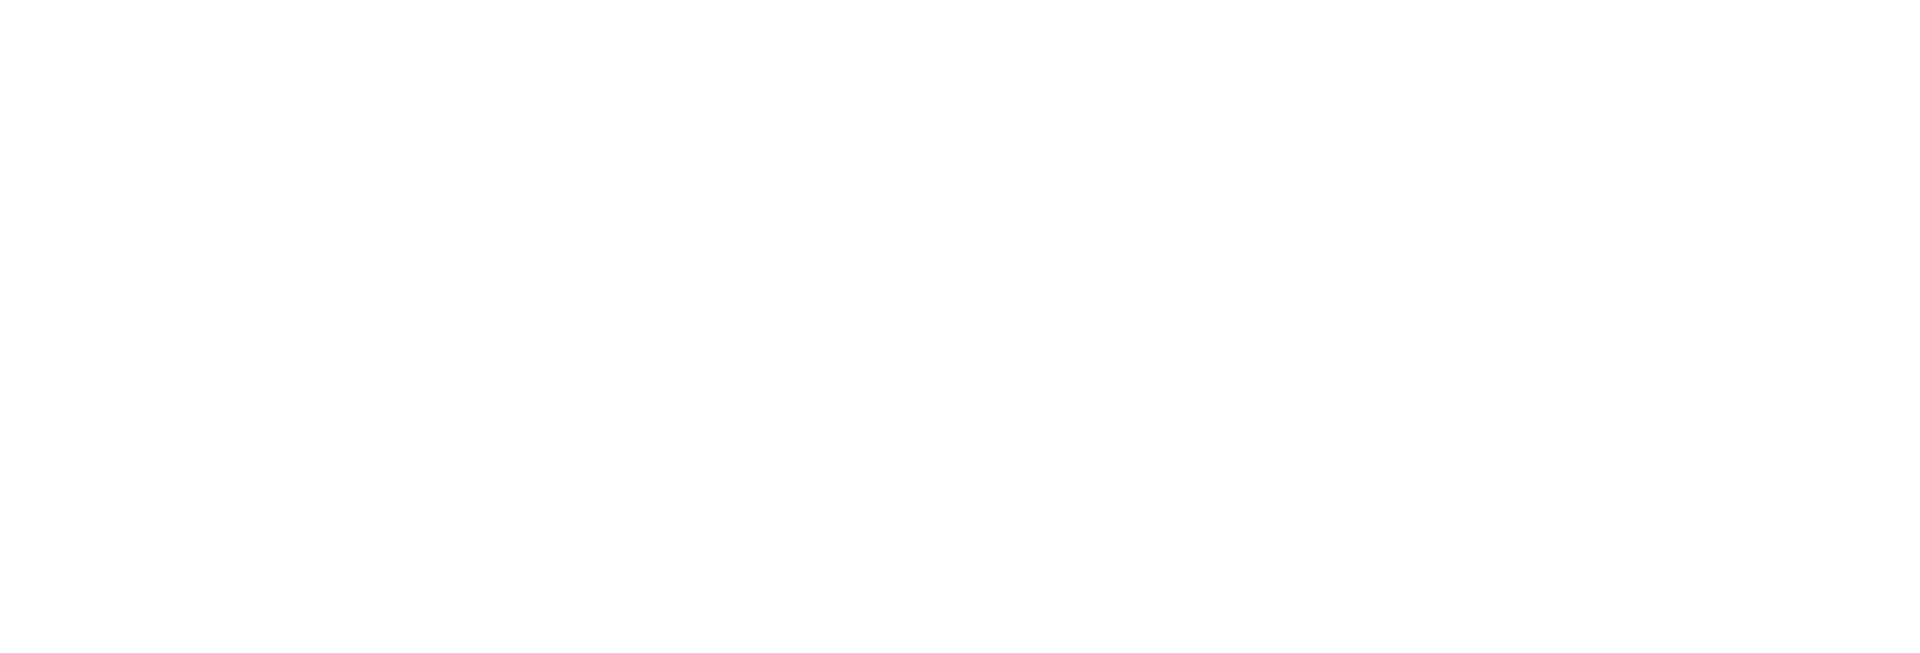 prestige-one-logo-white